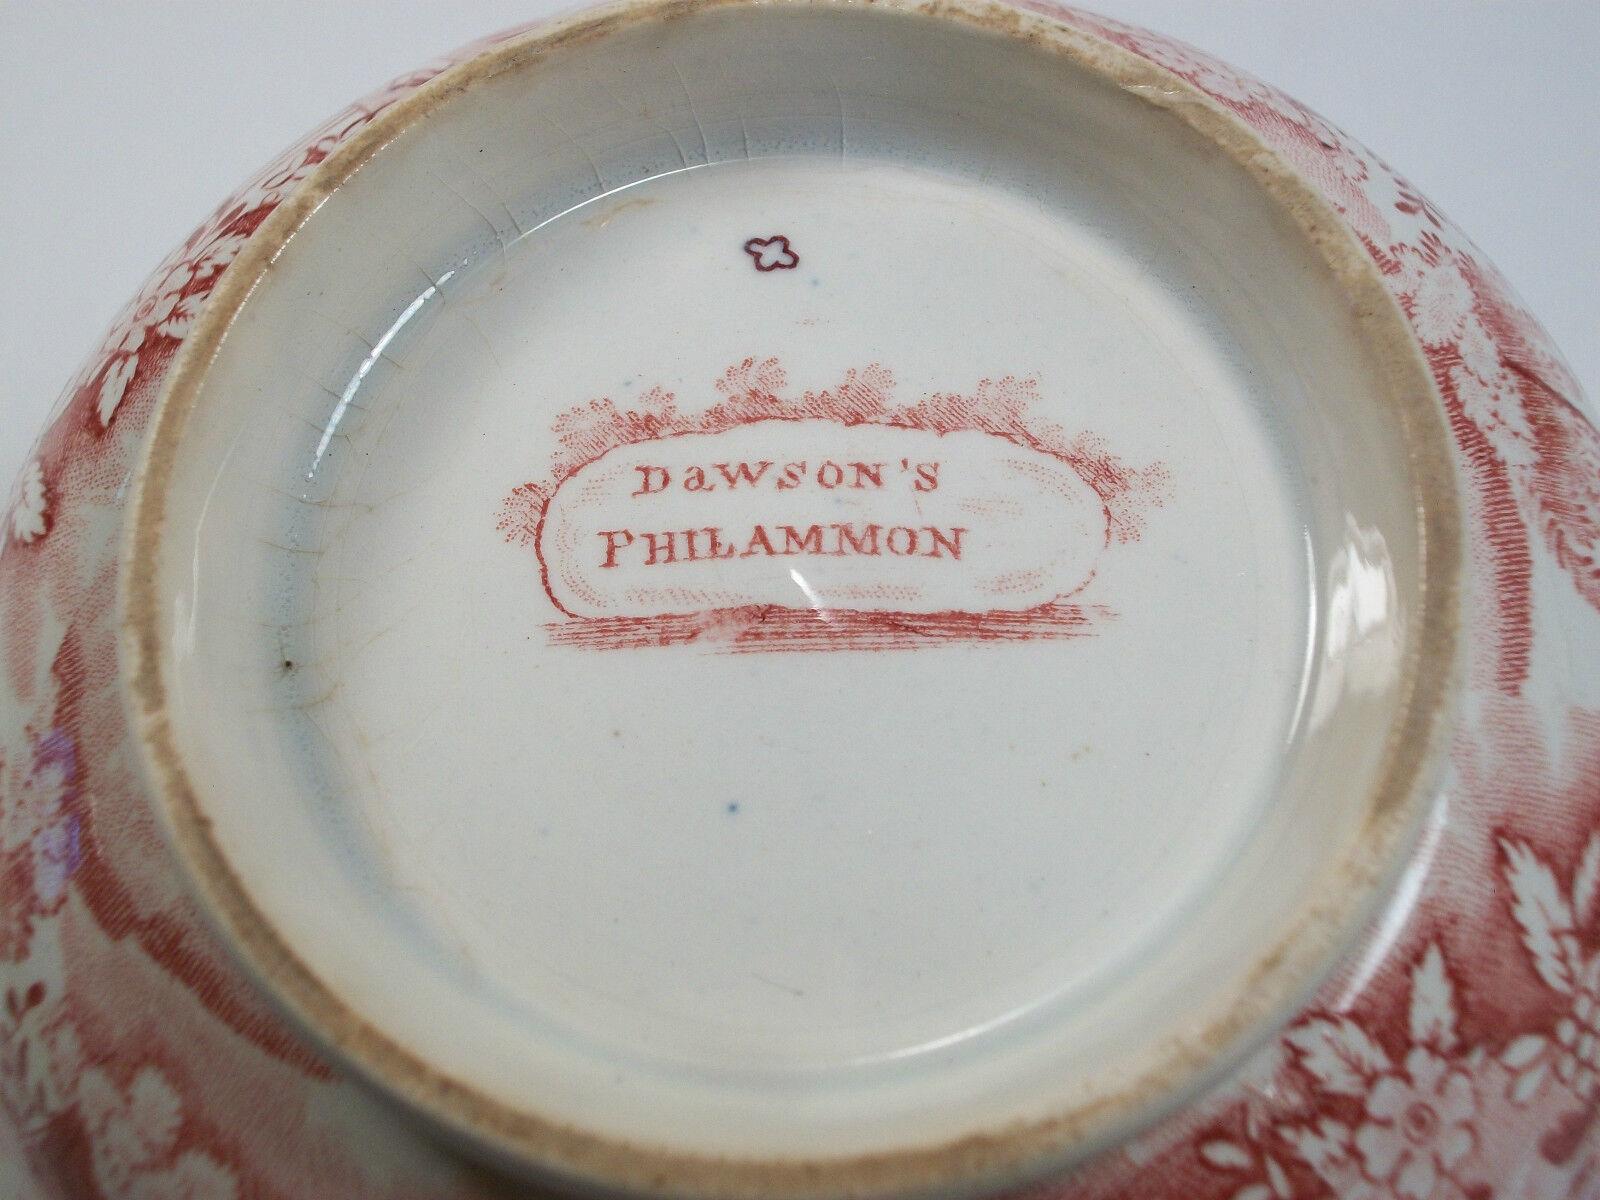 DAWSON'S - PHILAMMON - Red Transferware Sugar Bowl with Lid - UK - 19th Century For Sale 6